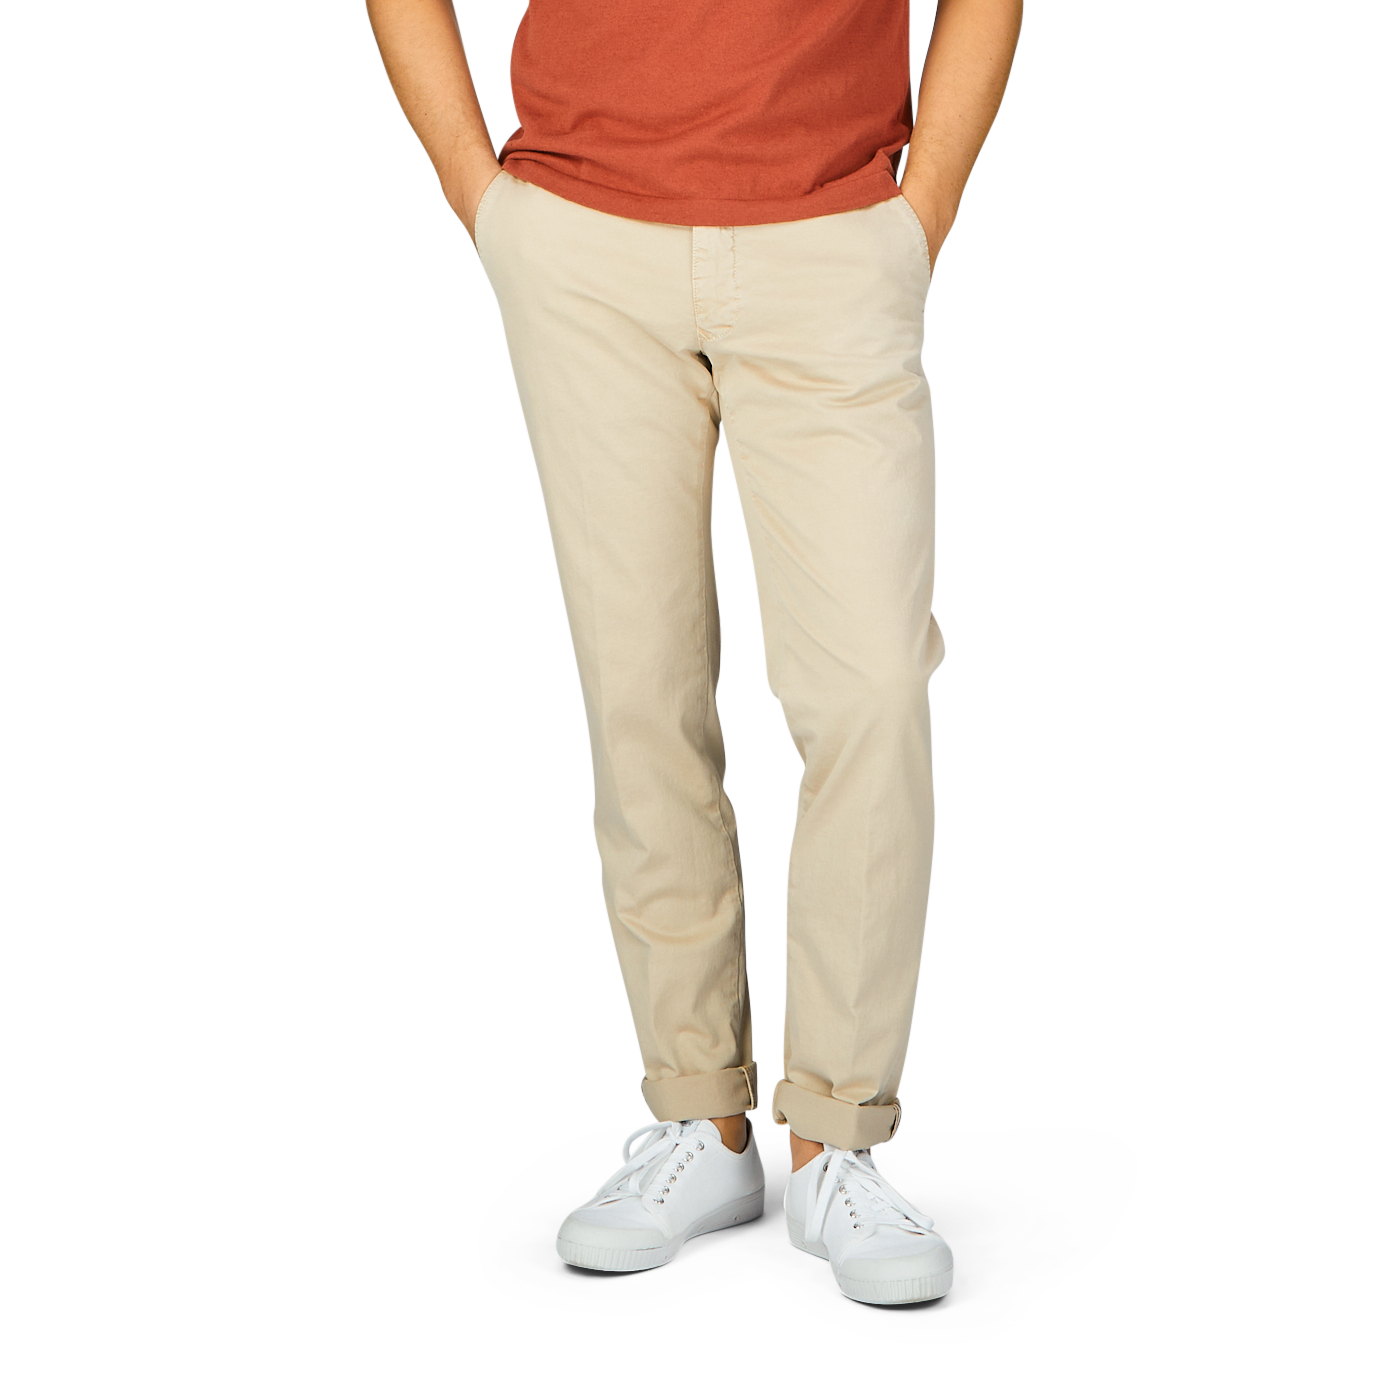 A man wearing a t-shirt and Incotex Light Beige Cotton Stretch Slacks Chinos.